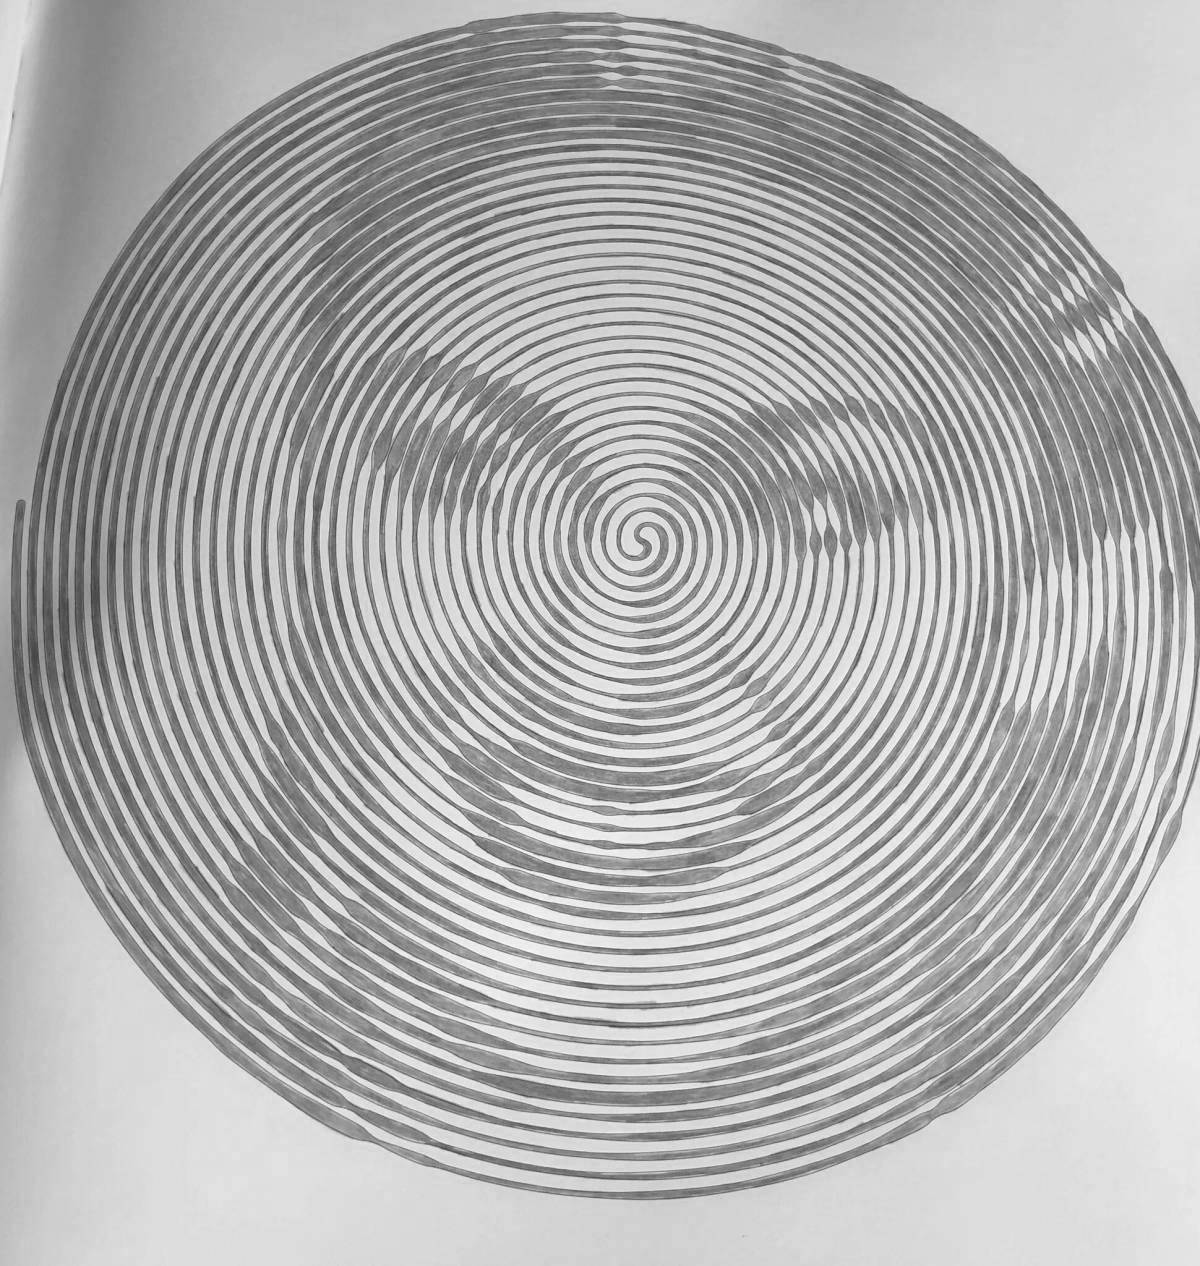 Delightful circular portrait